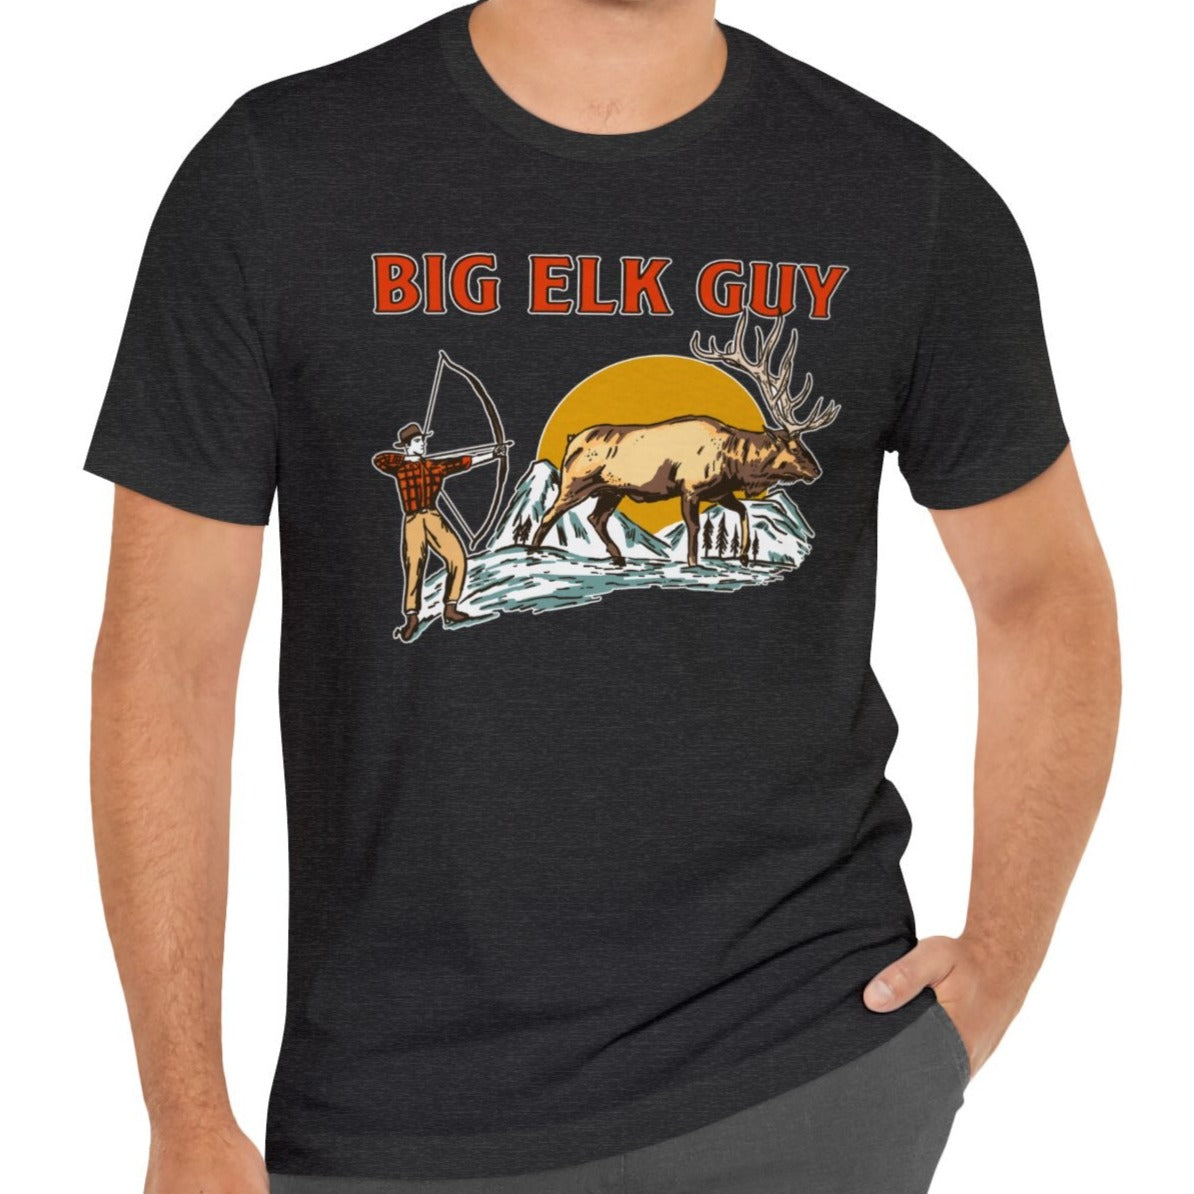 BIG ELK GUY T-SHIRT